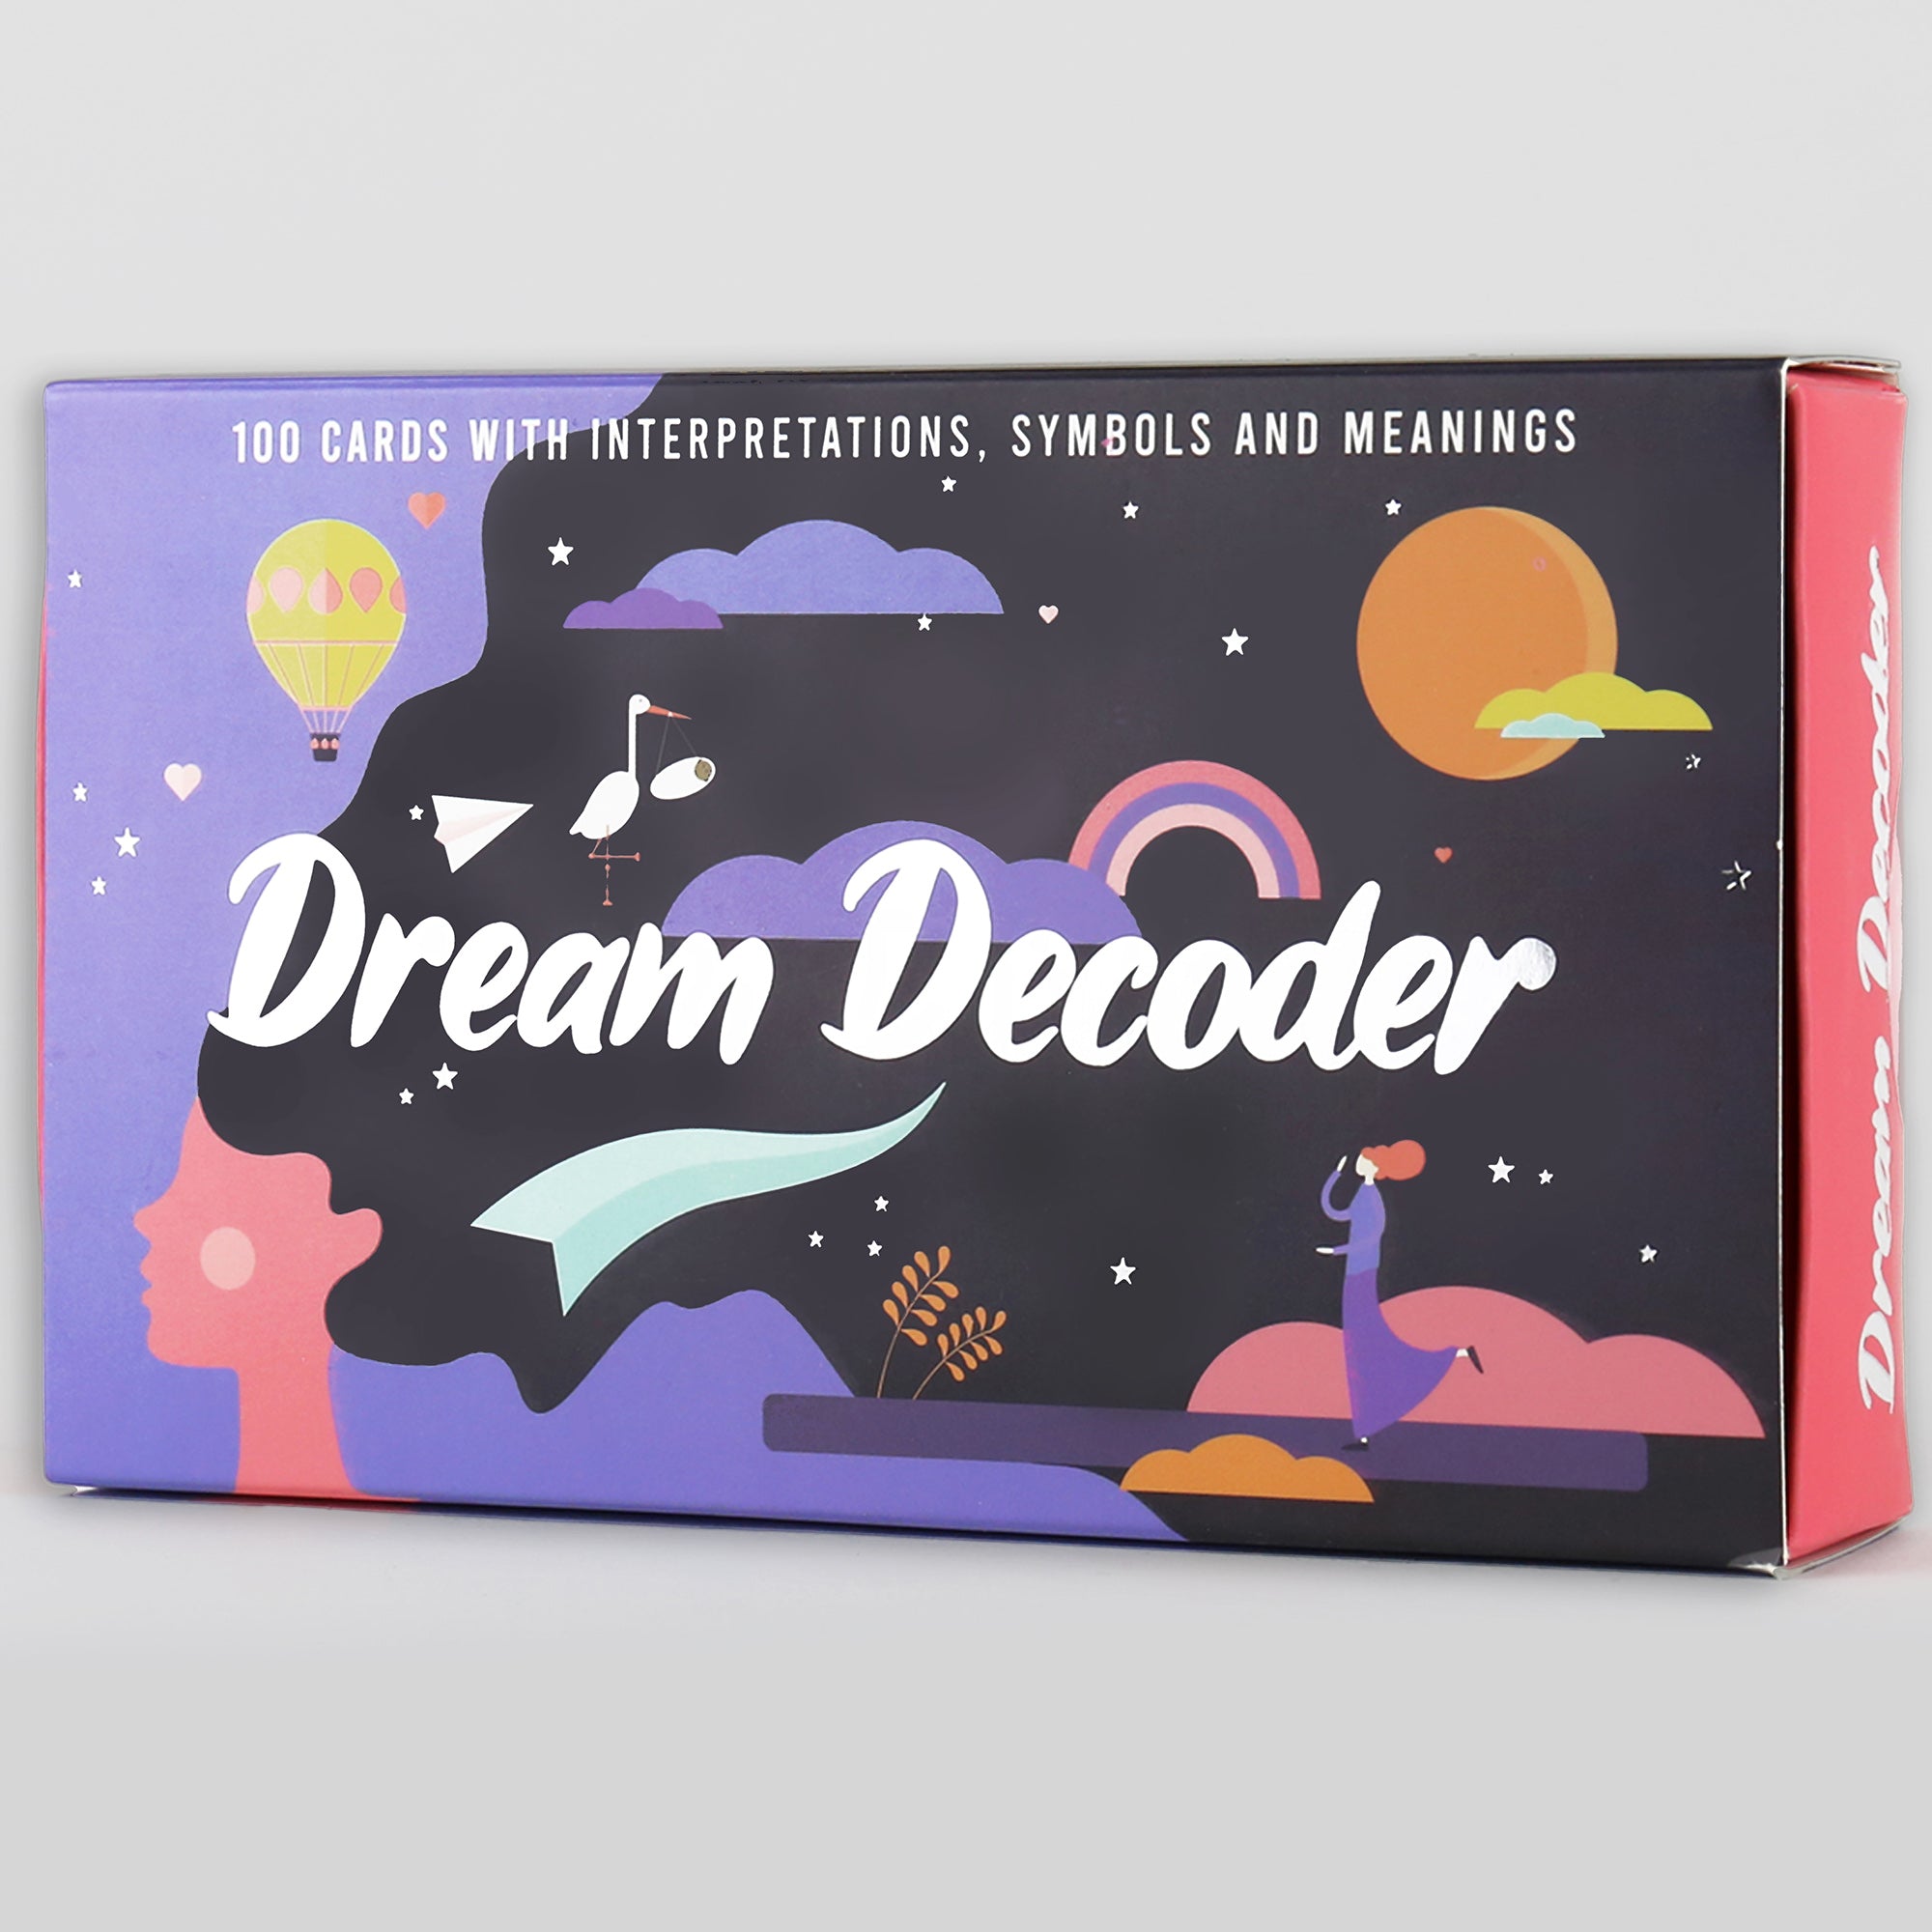 Dream Decoder Cards Pack